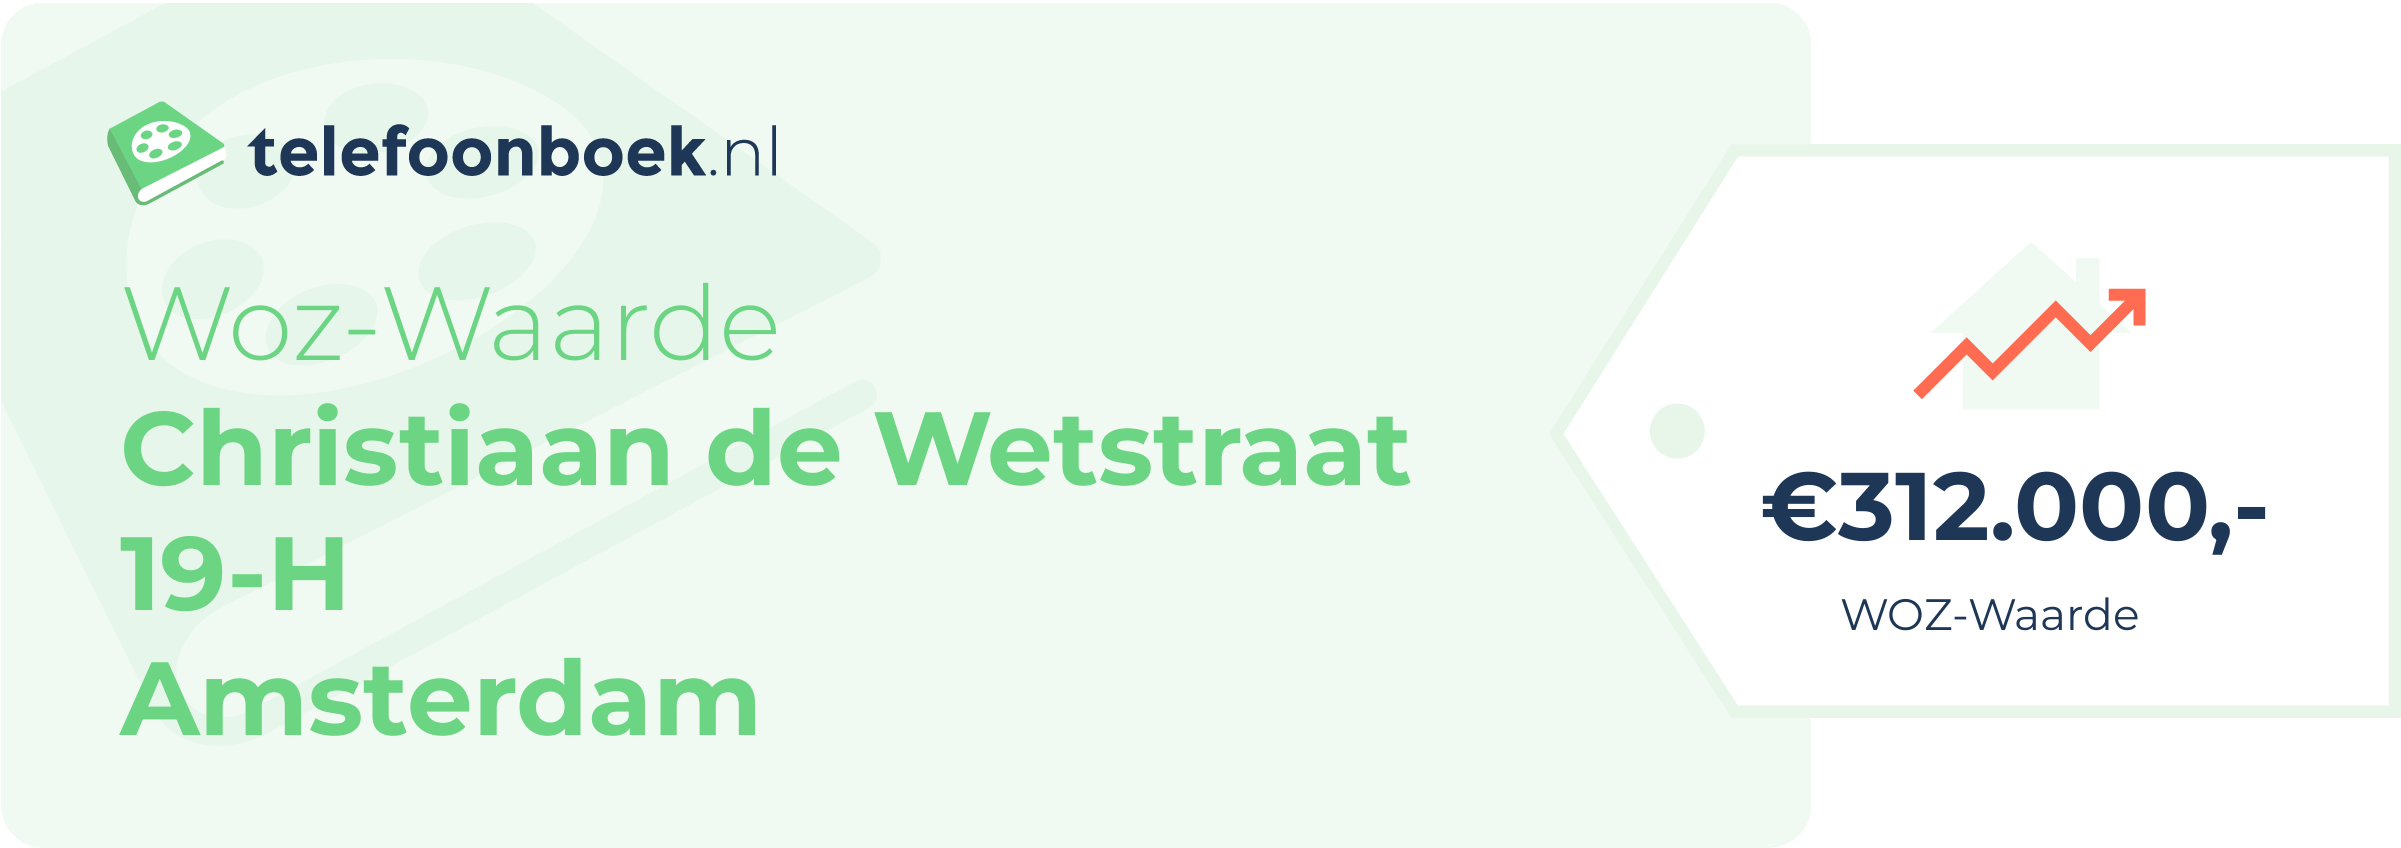 WOZ-waarde Christiaan De Wetstraat 19-H Amsterdam